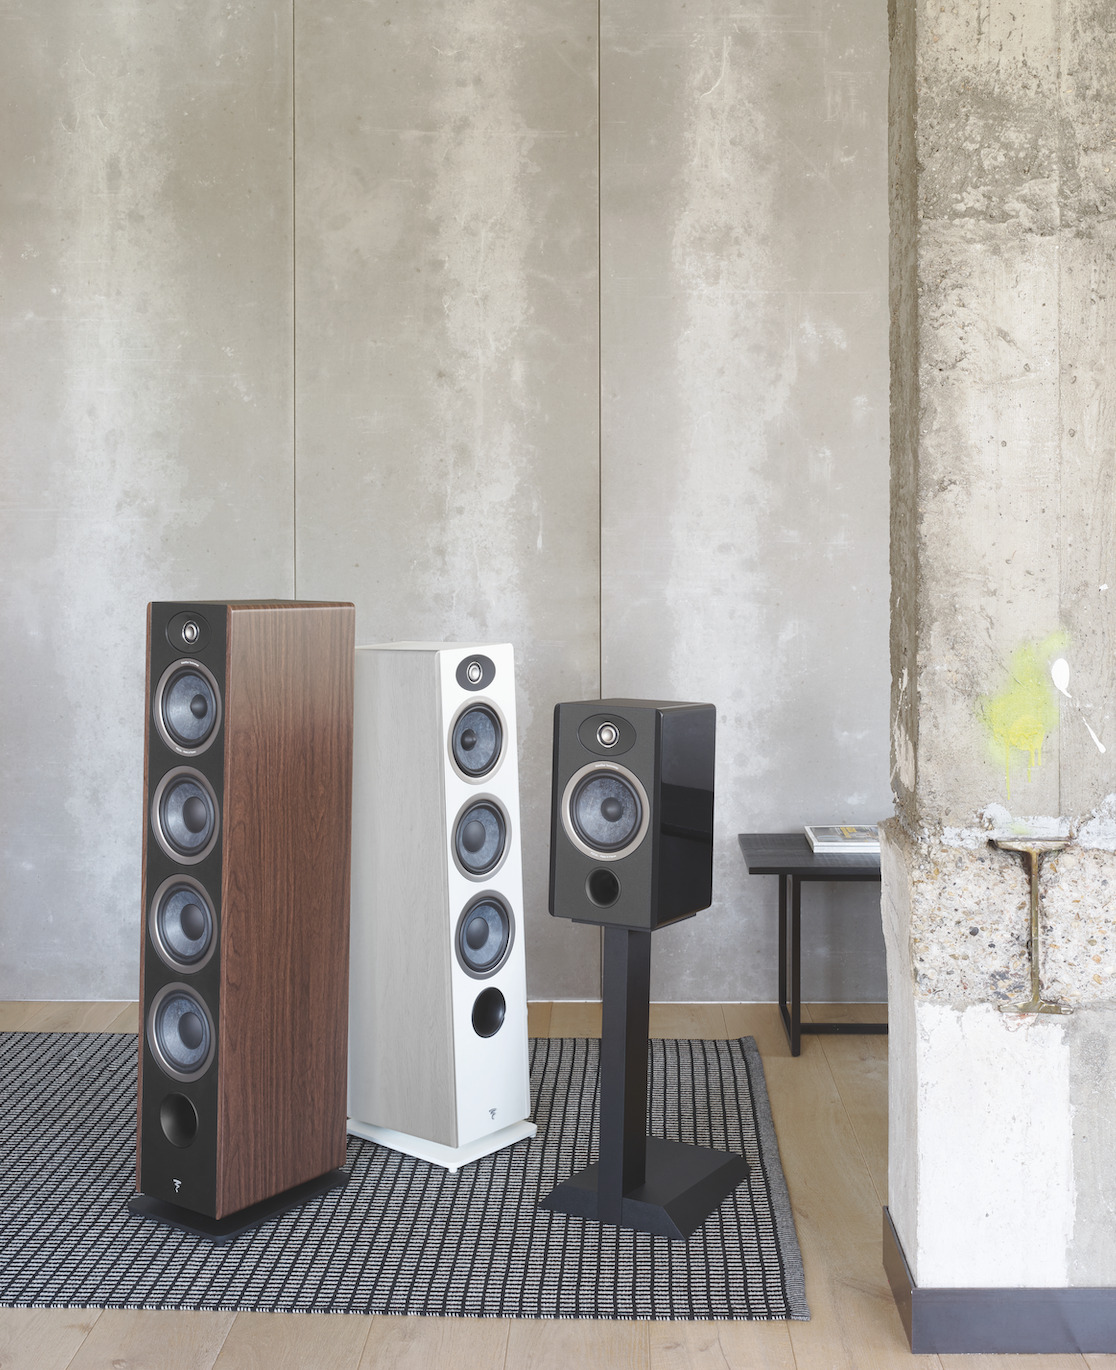 Focal Presents Vestia, Its New Line of High-Fidelity Loudspeakers